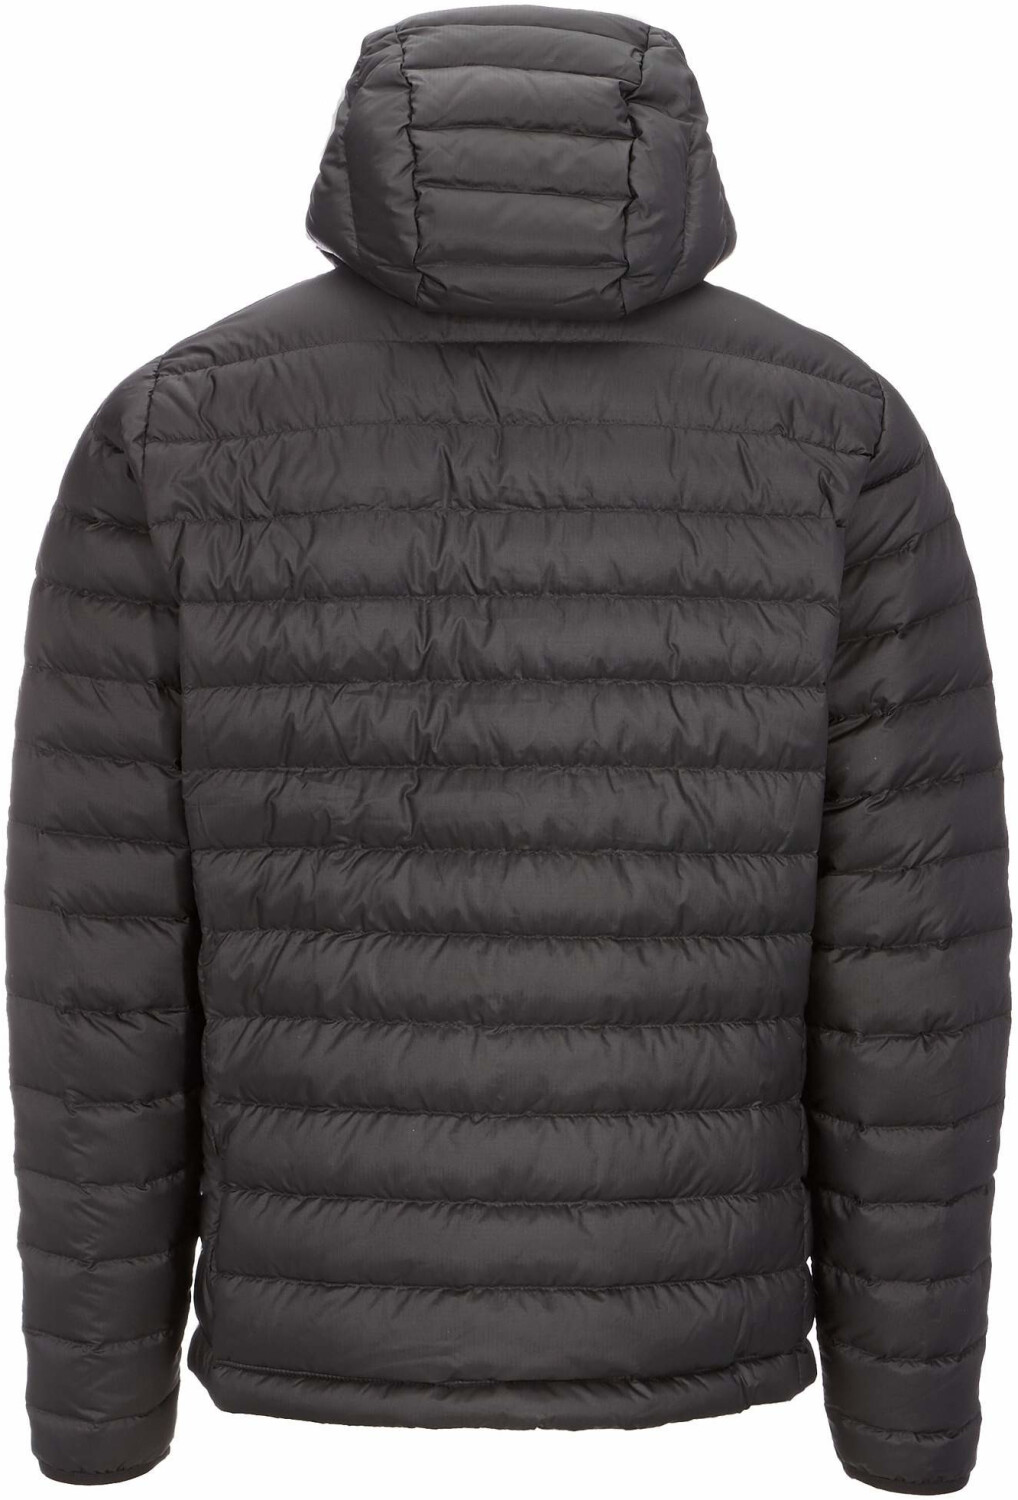 Buy Patagonia Men's Down Sweater Hoody (84701) black from £202.39 ...